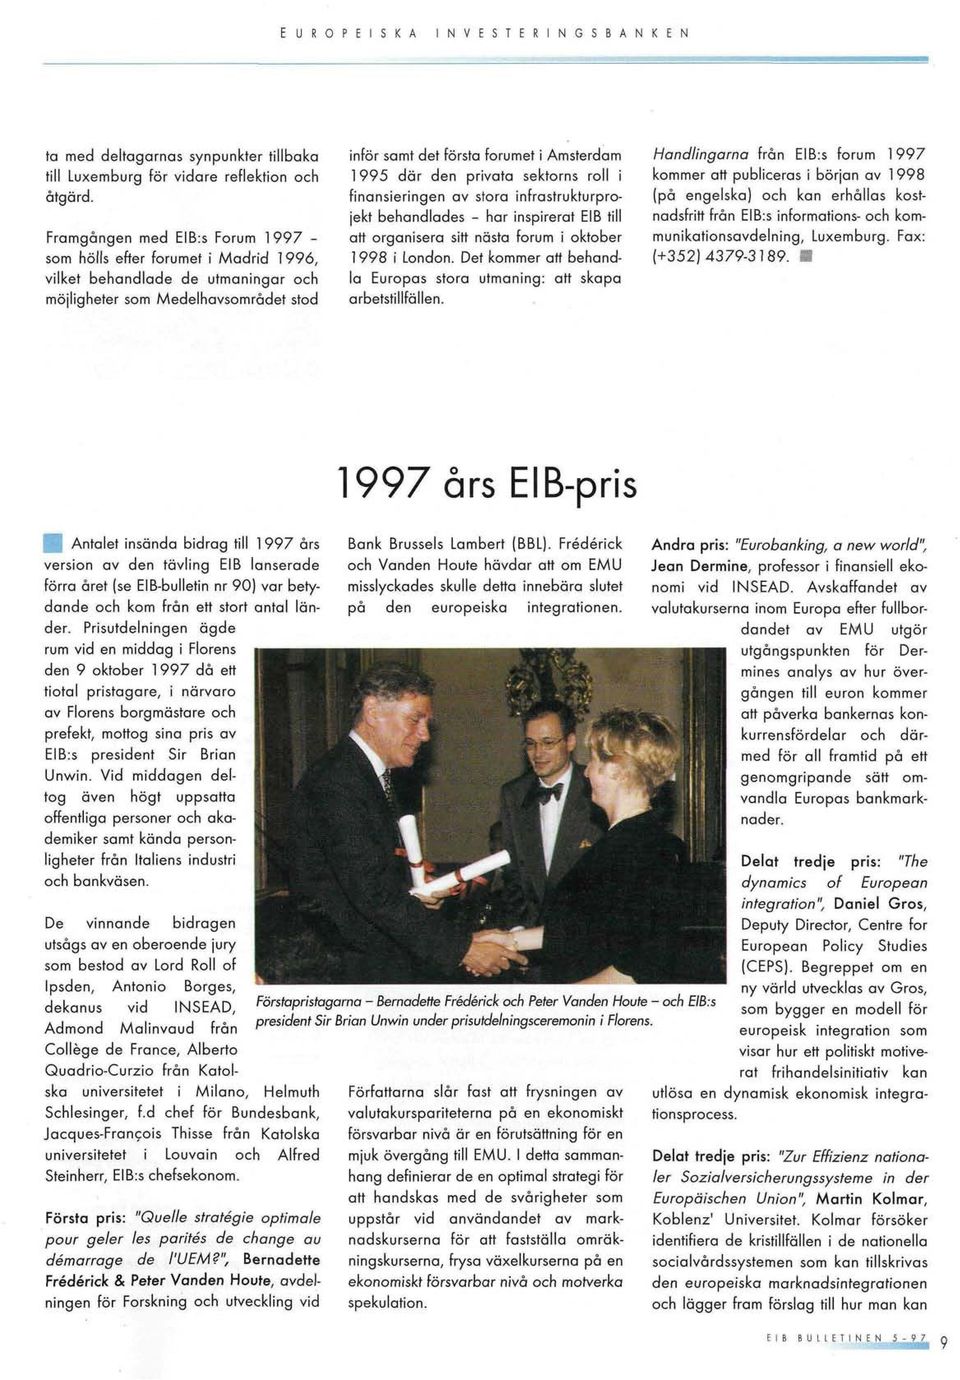 den privoto sektorns roll i finonsieringen ov storo infrastruklurprojekt behondlodes - hor inspirerai EIB tili ett ergonisero sili nösto forum i oktober 1998 i London.